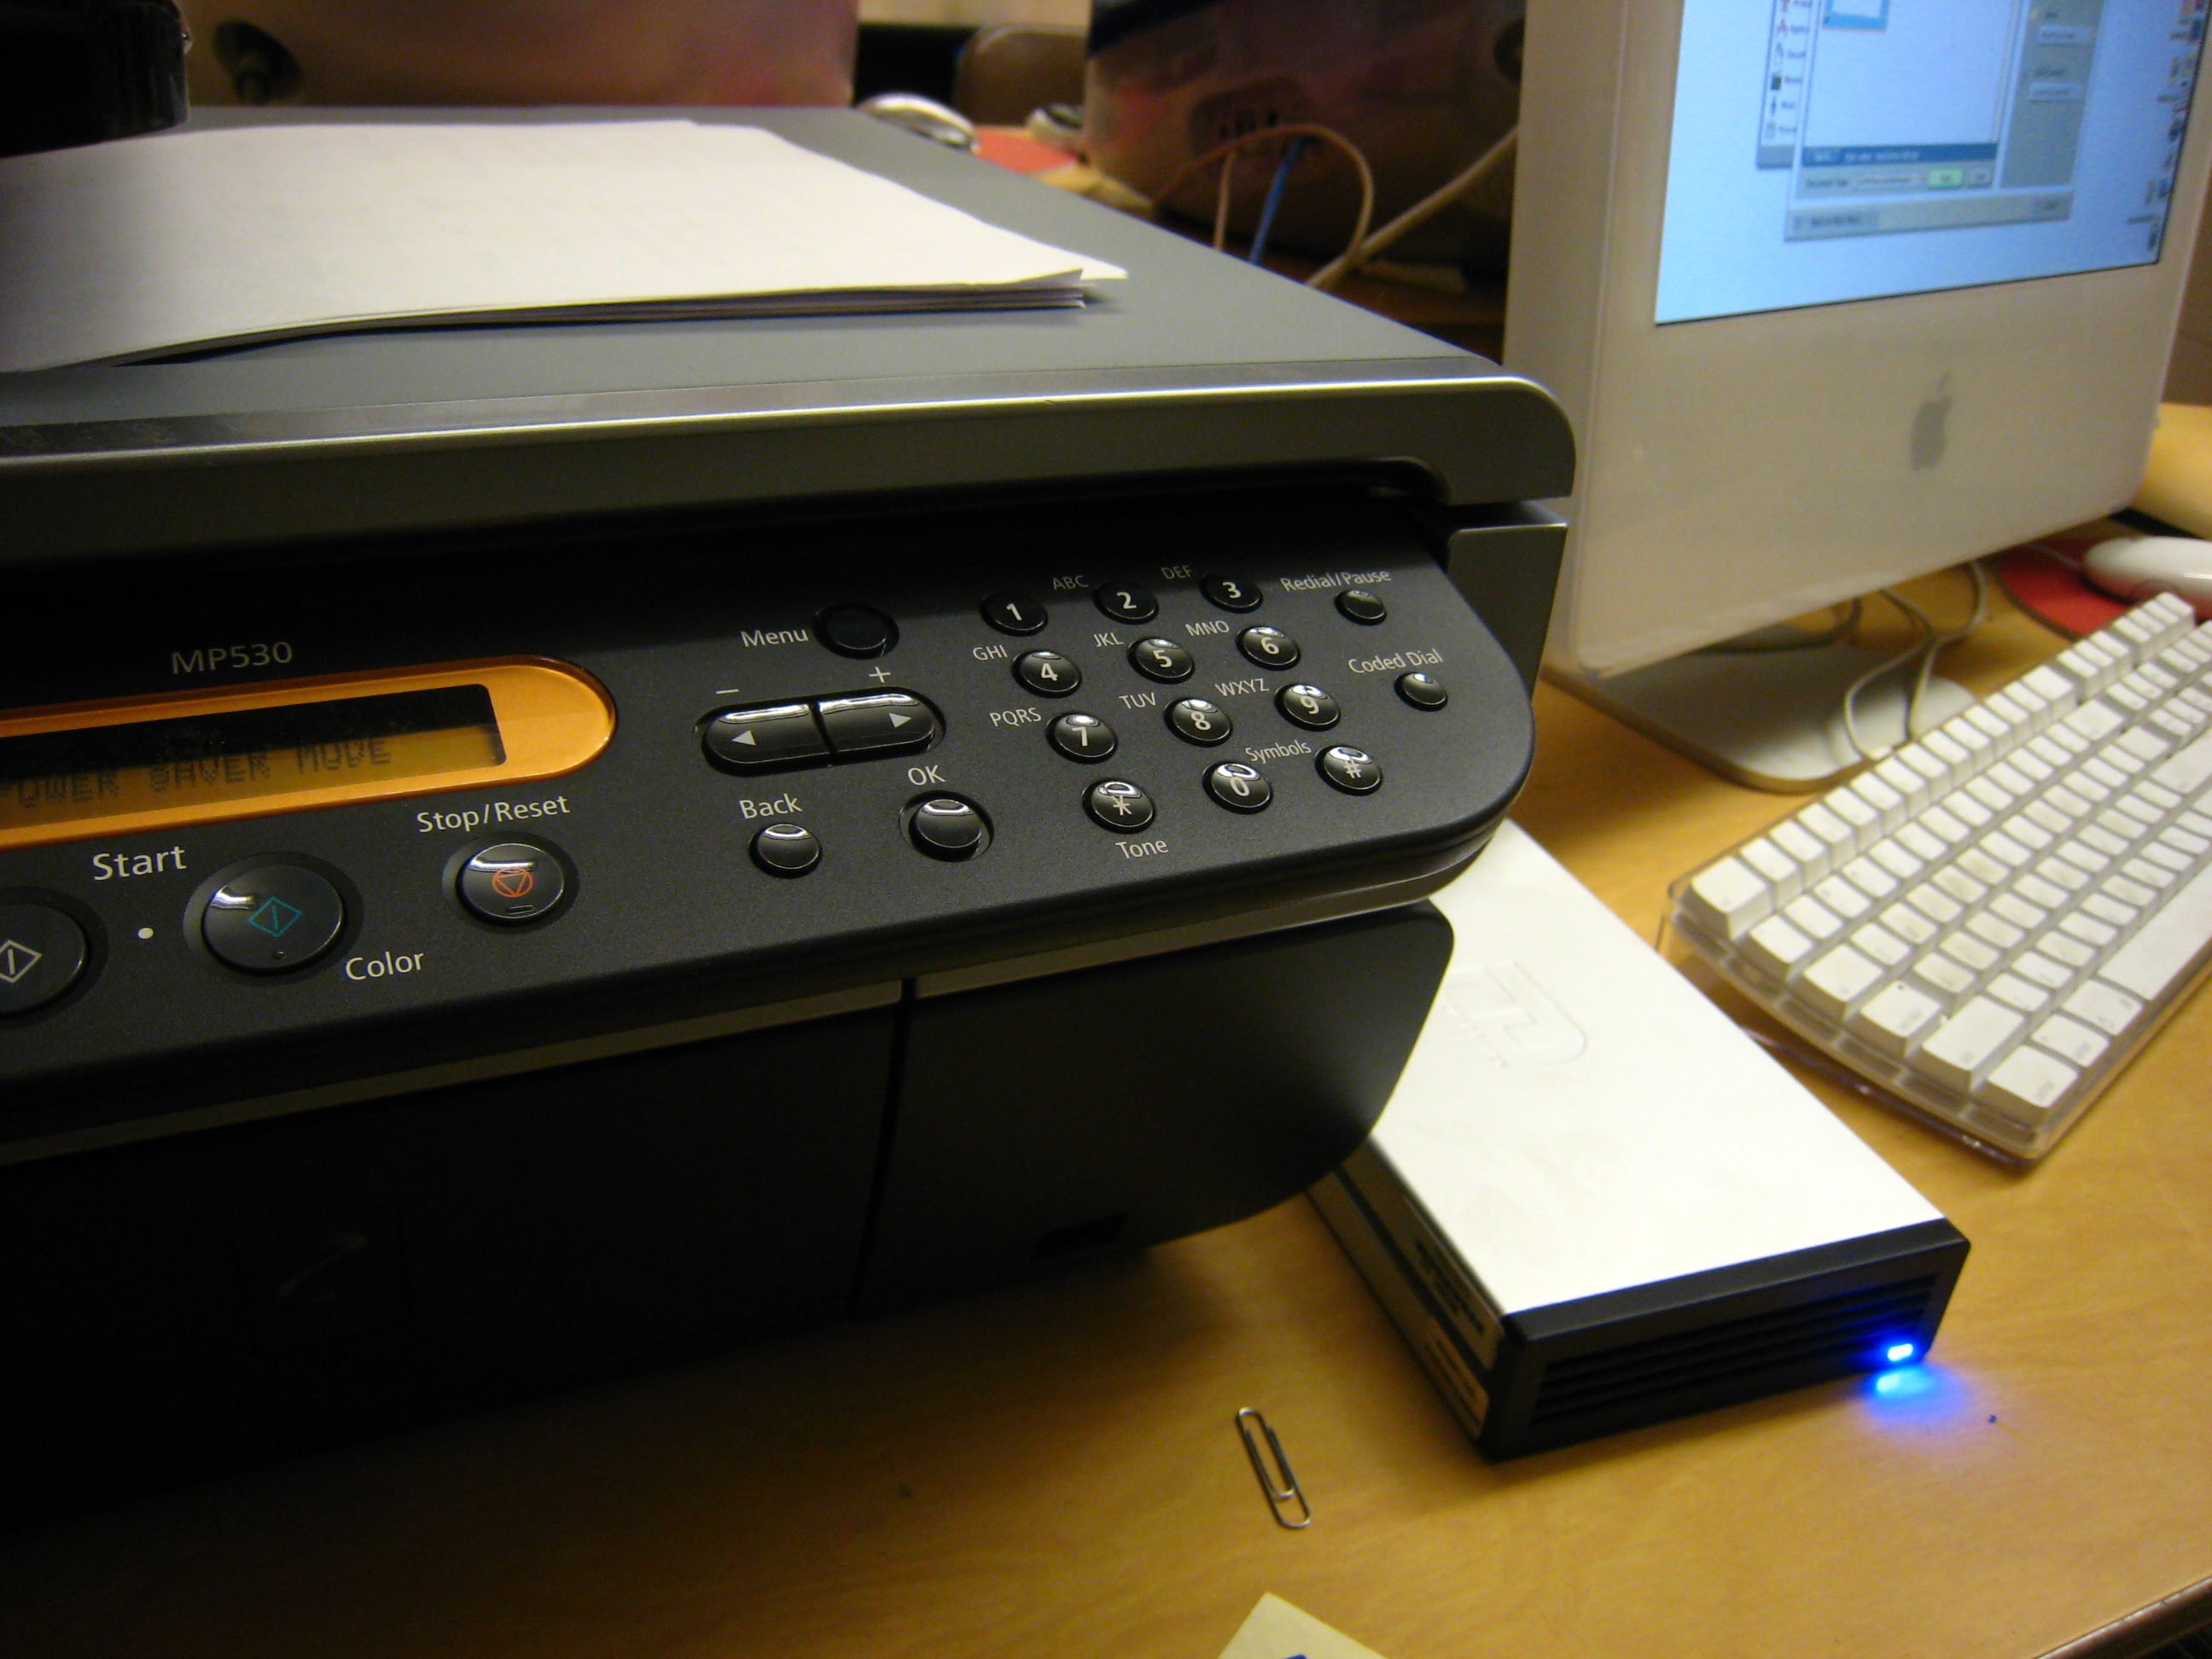 mp530 scanner external hard drive iMac